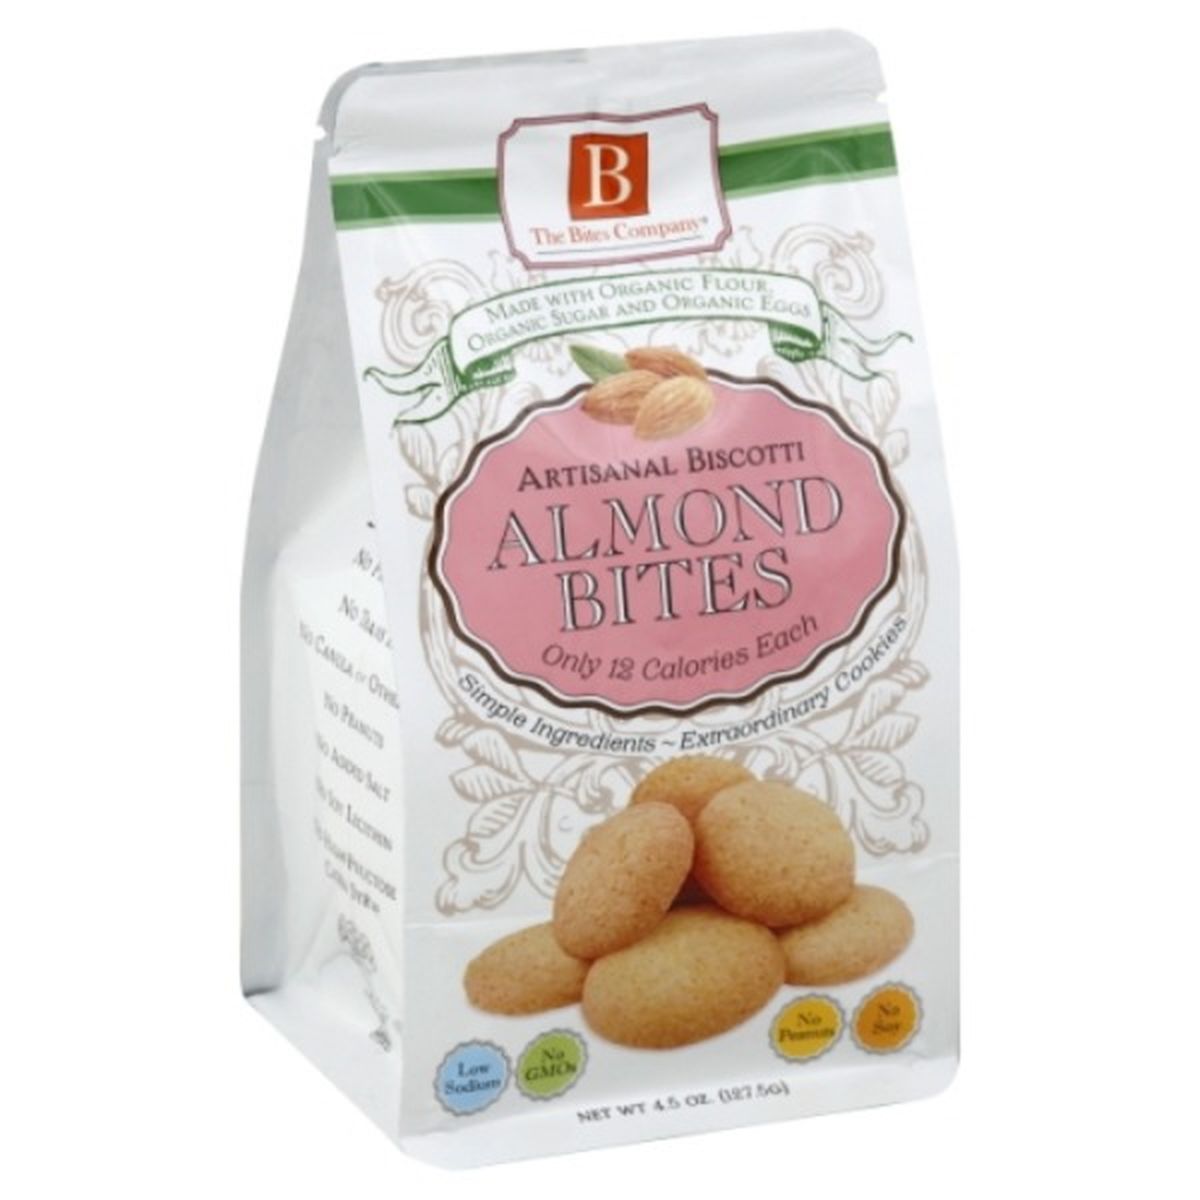 Calories in The Bites Company Almond Bites